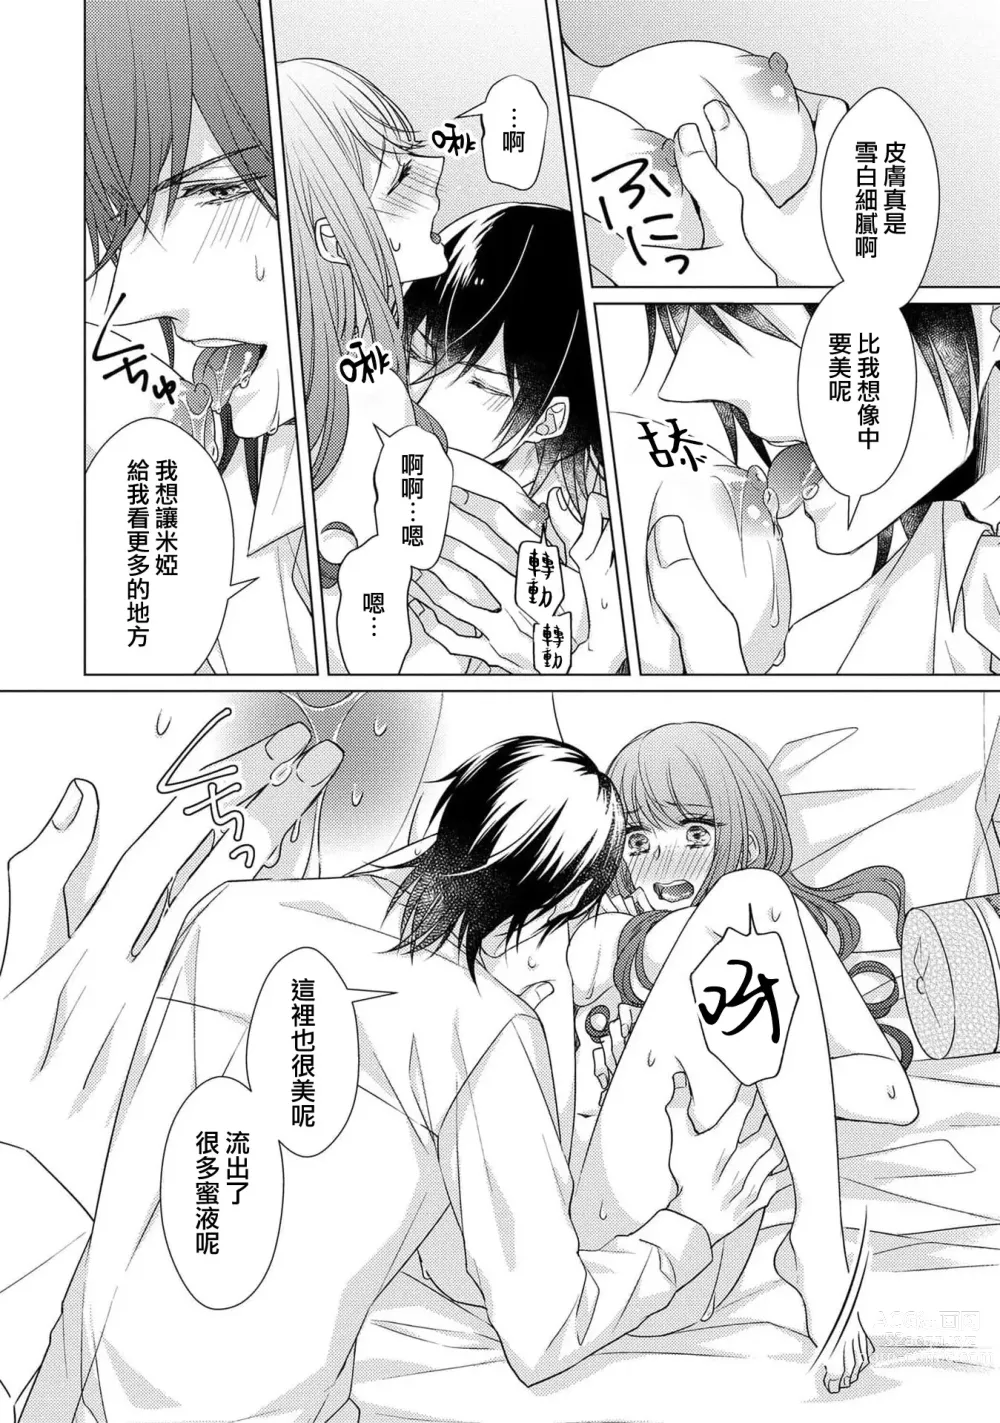 Page 162 of manga 宠爱王子和处女少女~30岁还是处女，这一次和真壁社长签订了炮友契约~ 1-5 end